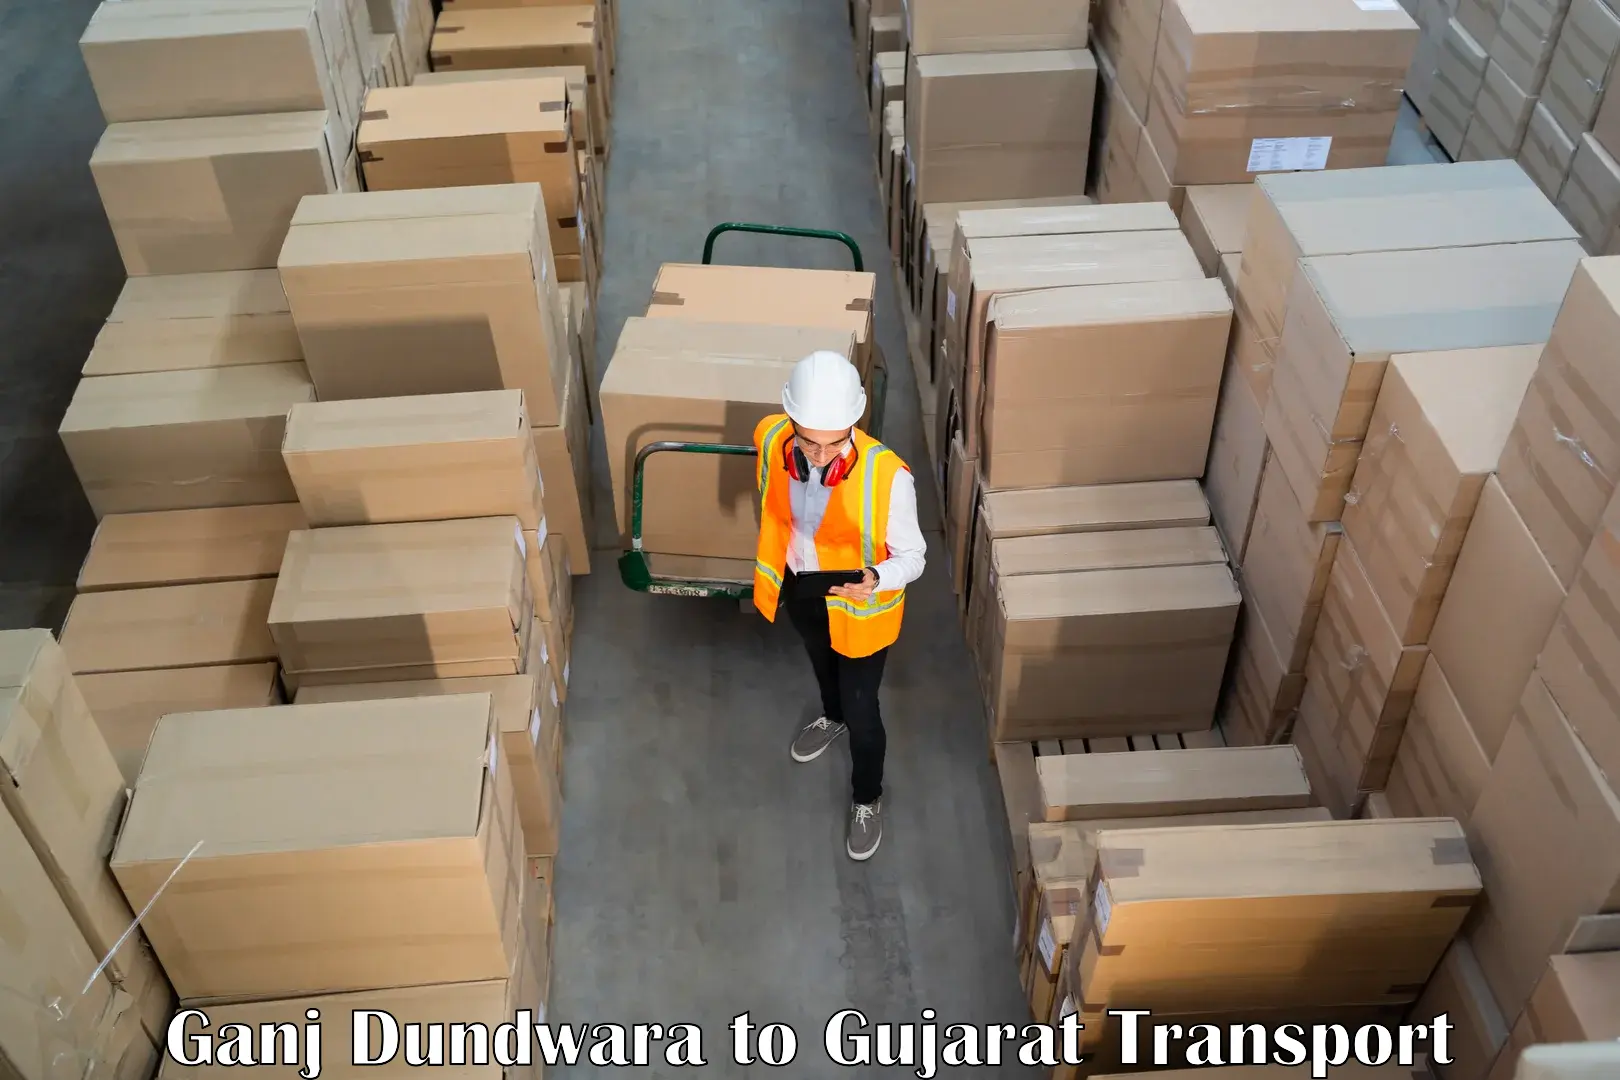 Truck transport companies in India Ganj Dundwara to Sihor